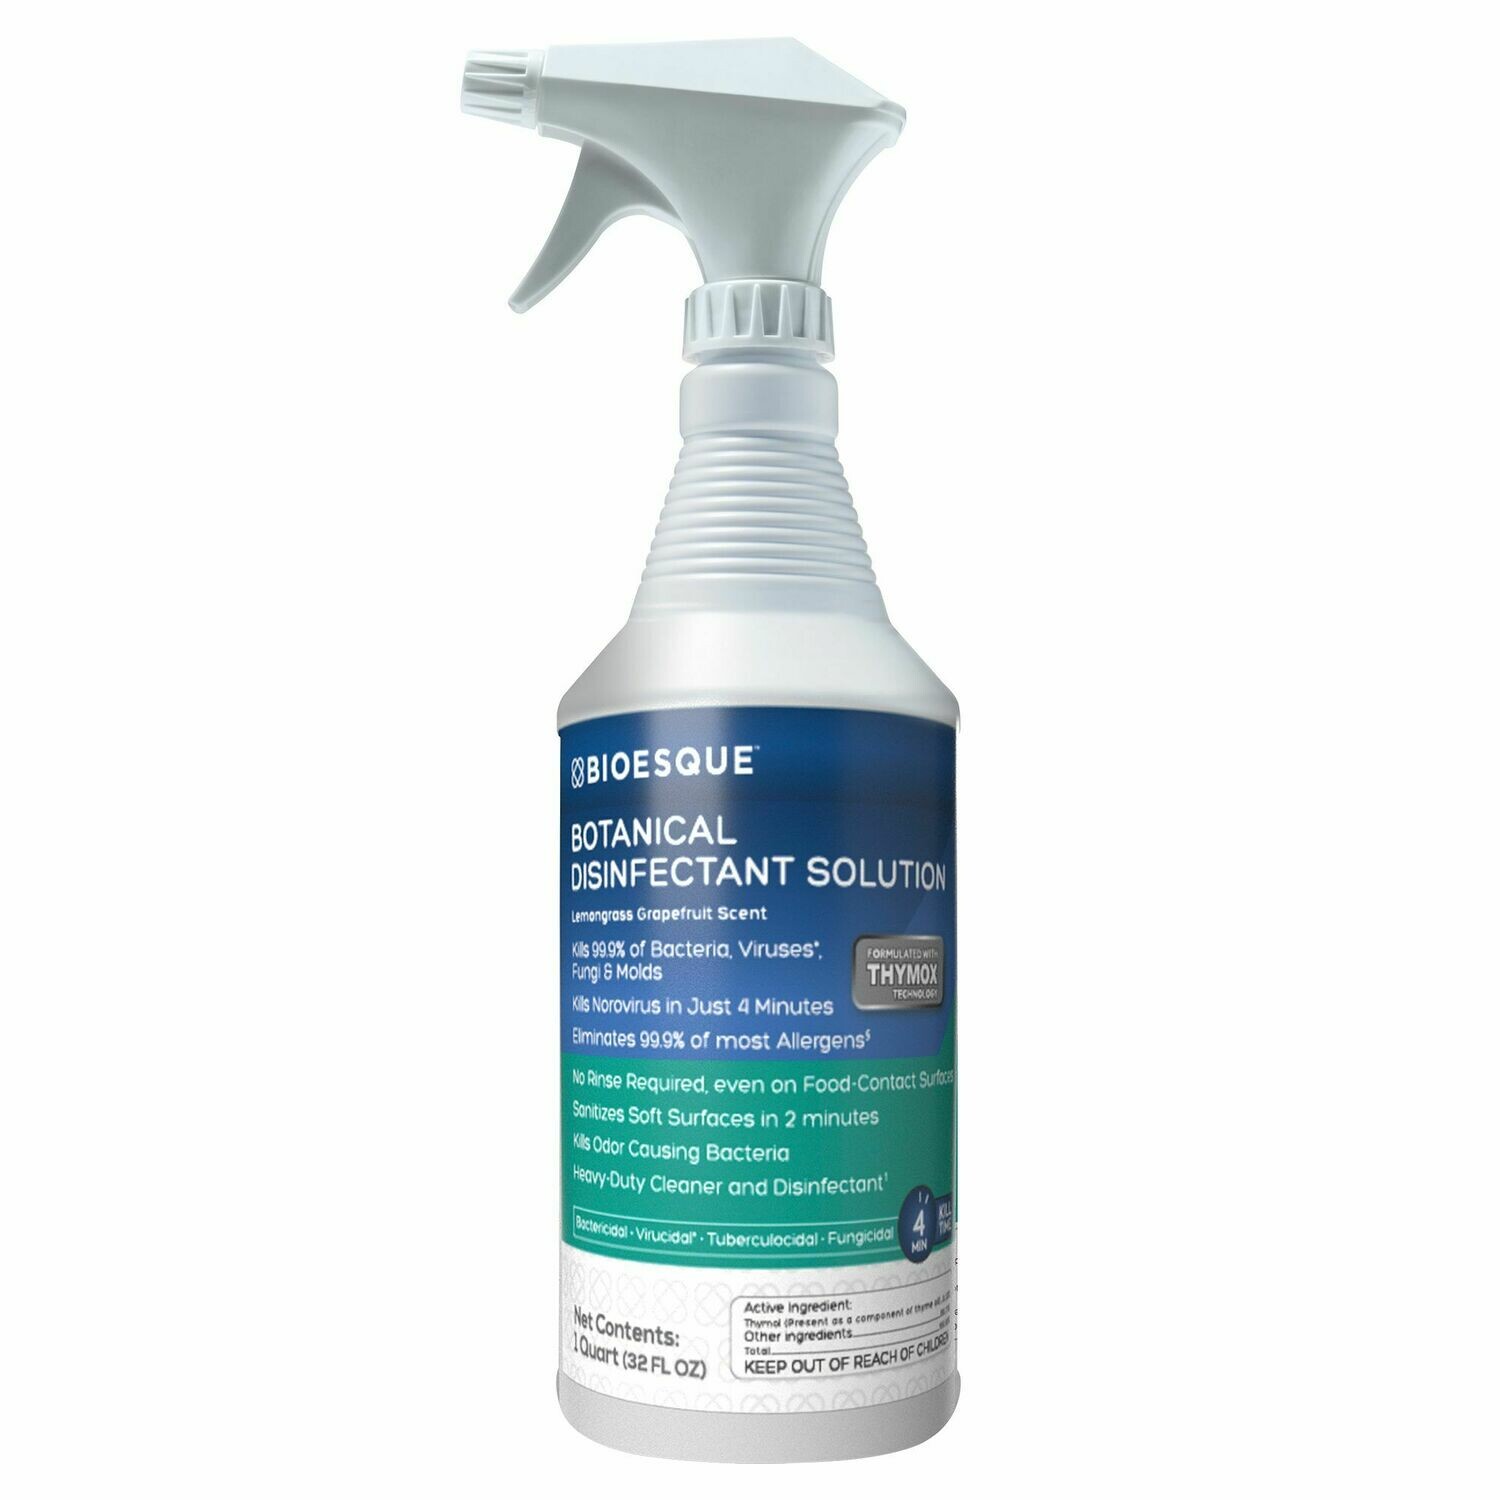 BIOESQUE Botanical Disinfectant Solution - 32 oz. Bottle with Trigger Sprayer